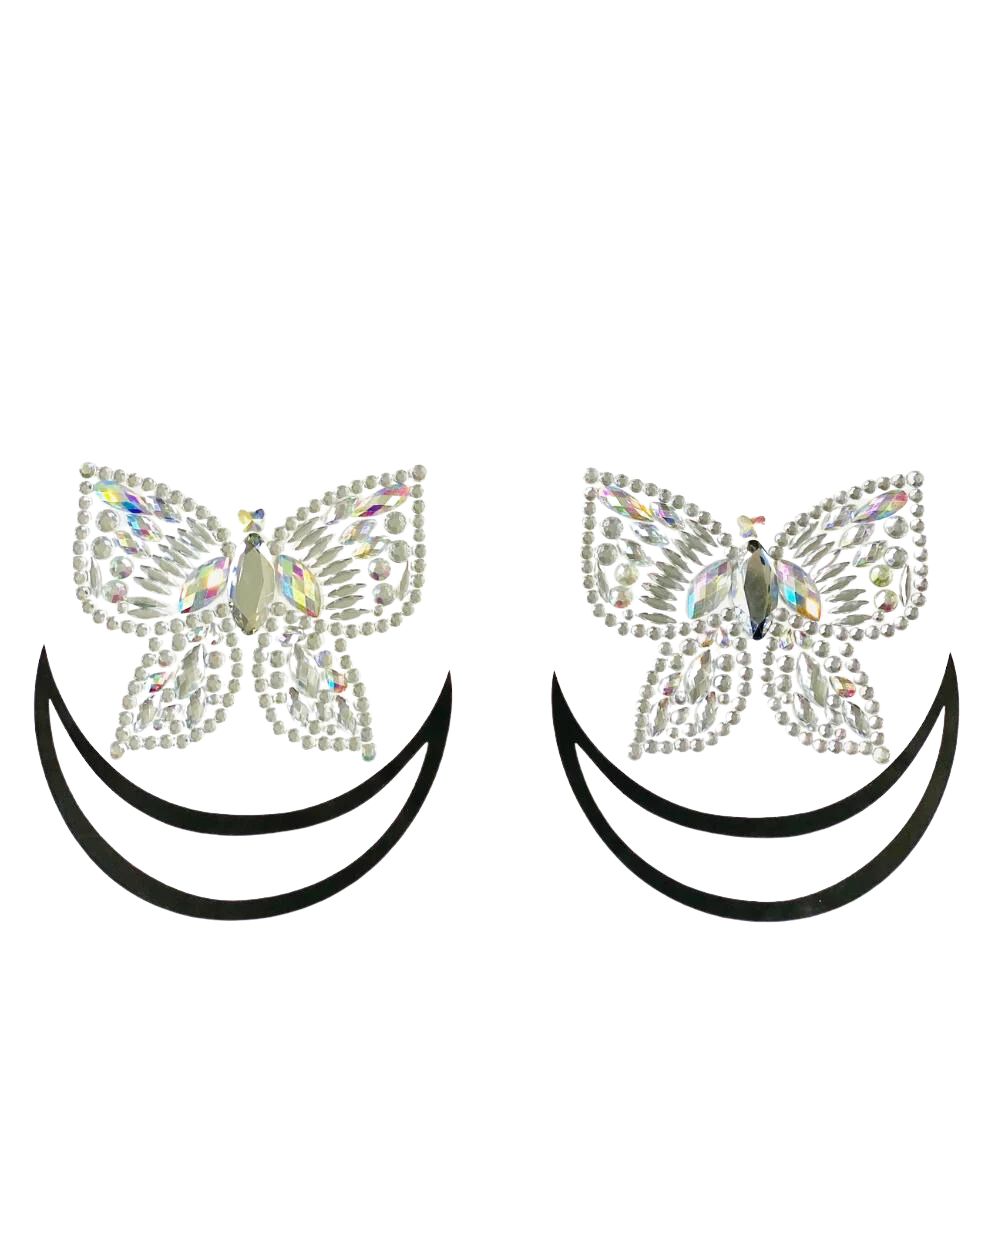 Social Butterfly Jewel Body Stickers - Lunautics